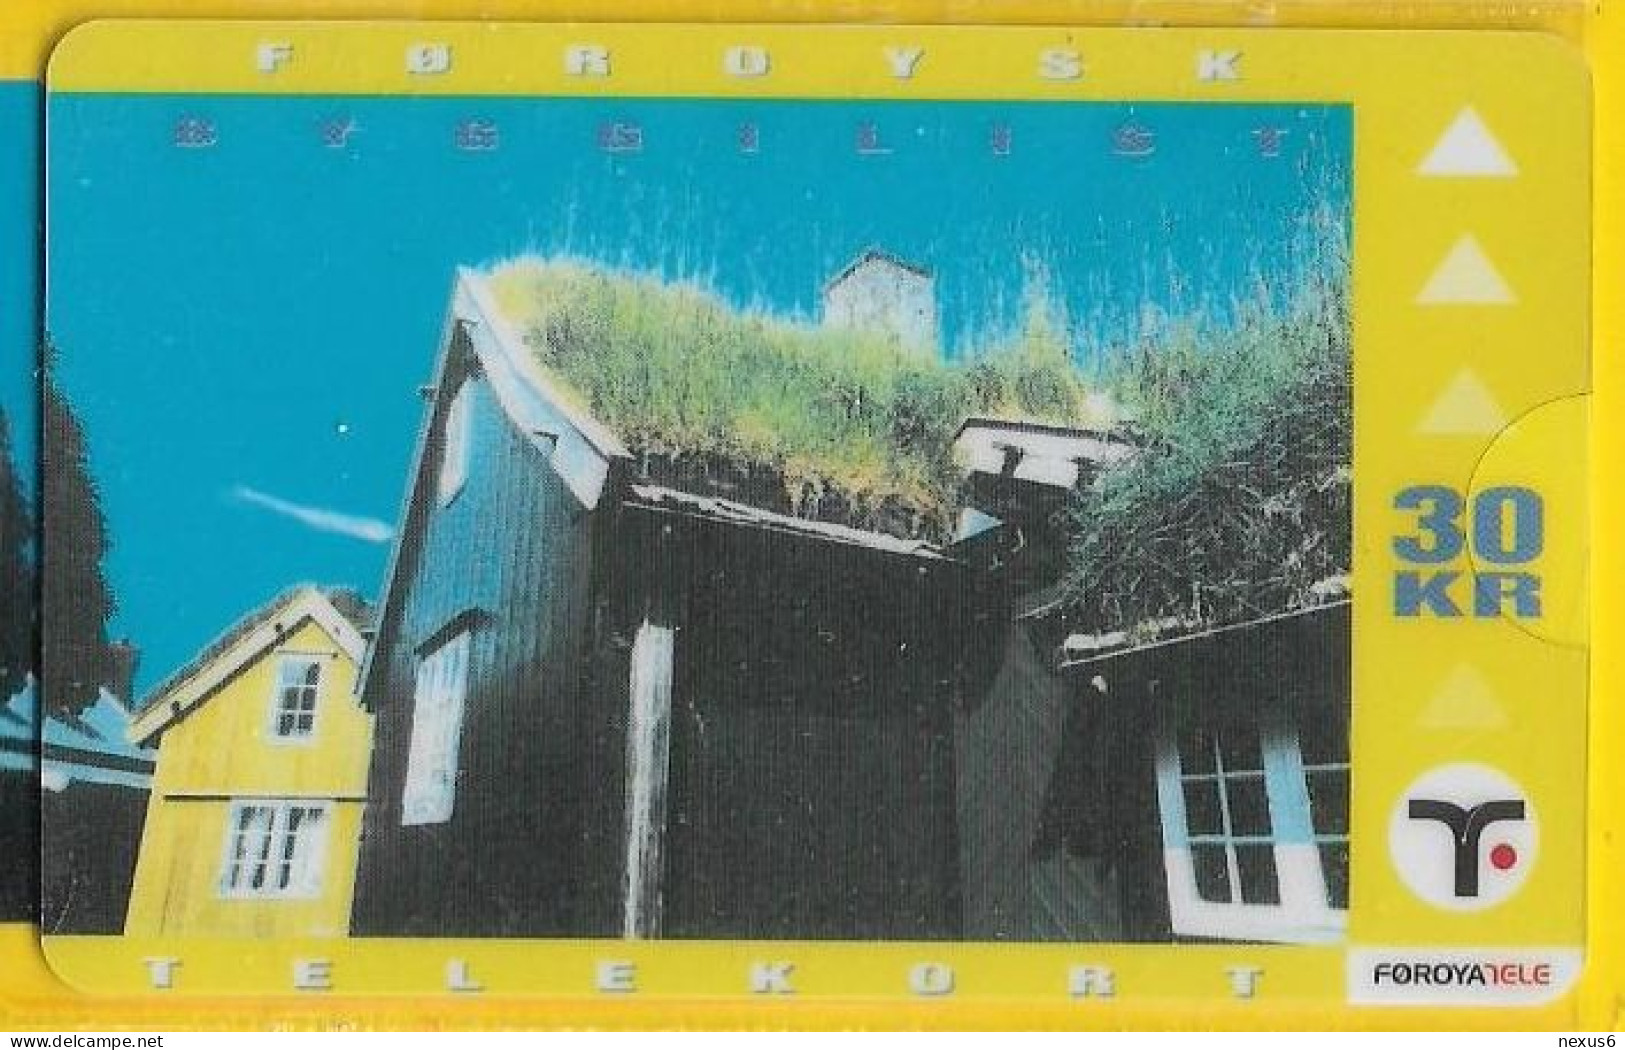 Faroe - Færøsk Byggekunst Pair Of 2 Cards, 1.000ex, Mint With Folder - Färöer I.